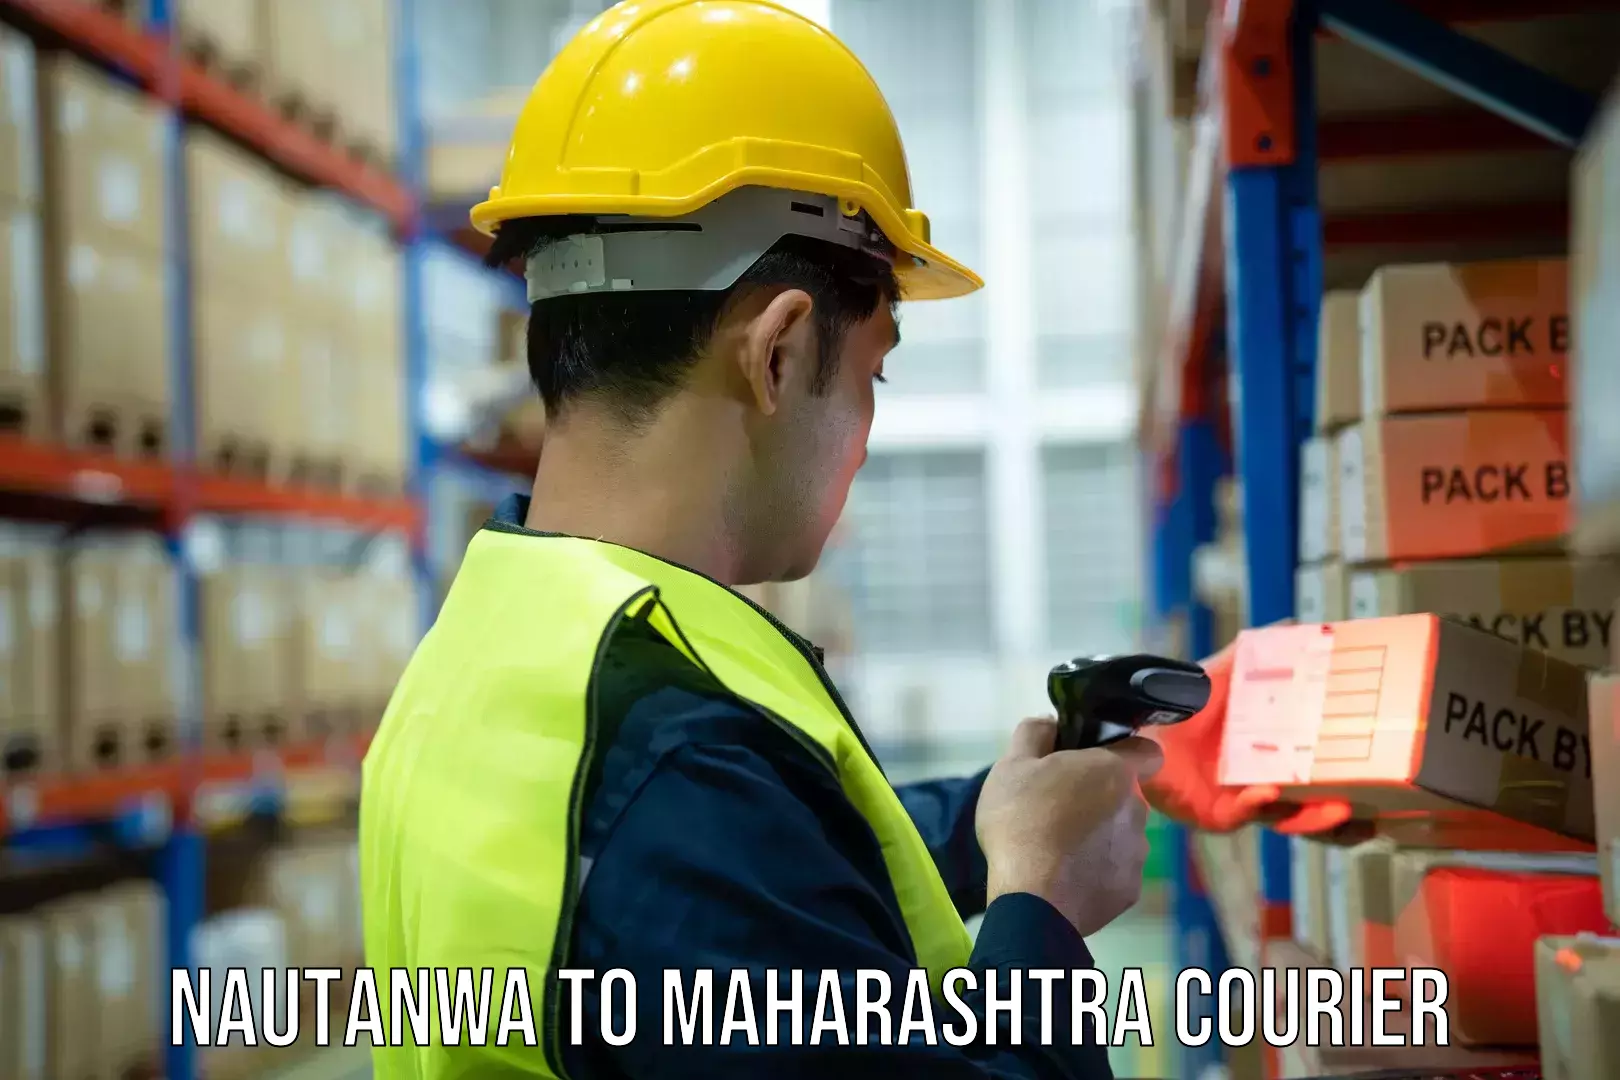 Courier service partnerships Nautanwa to DY Patil Vidyapeeth Mumbai